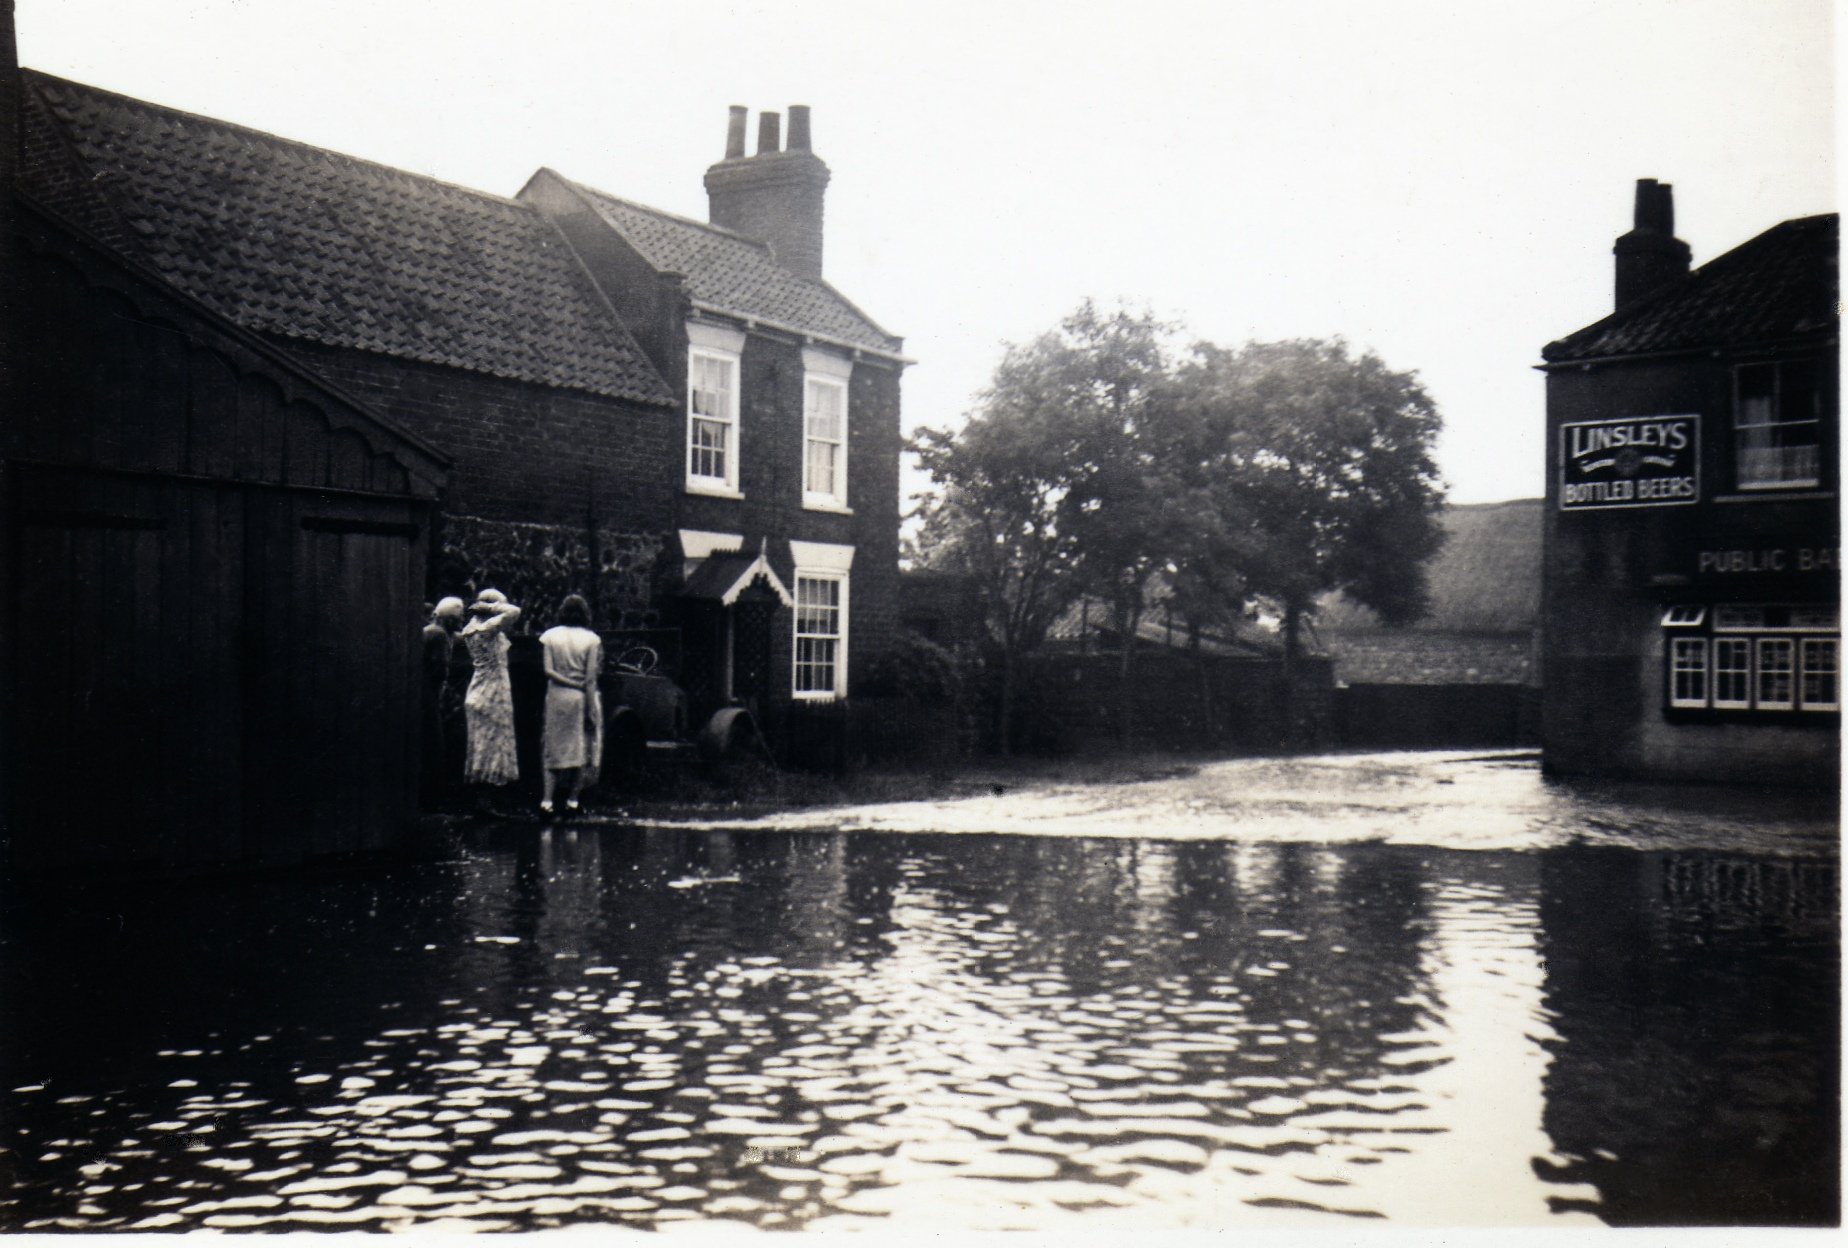 Photo taken around 1935 when flooding occurred